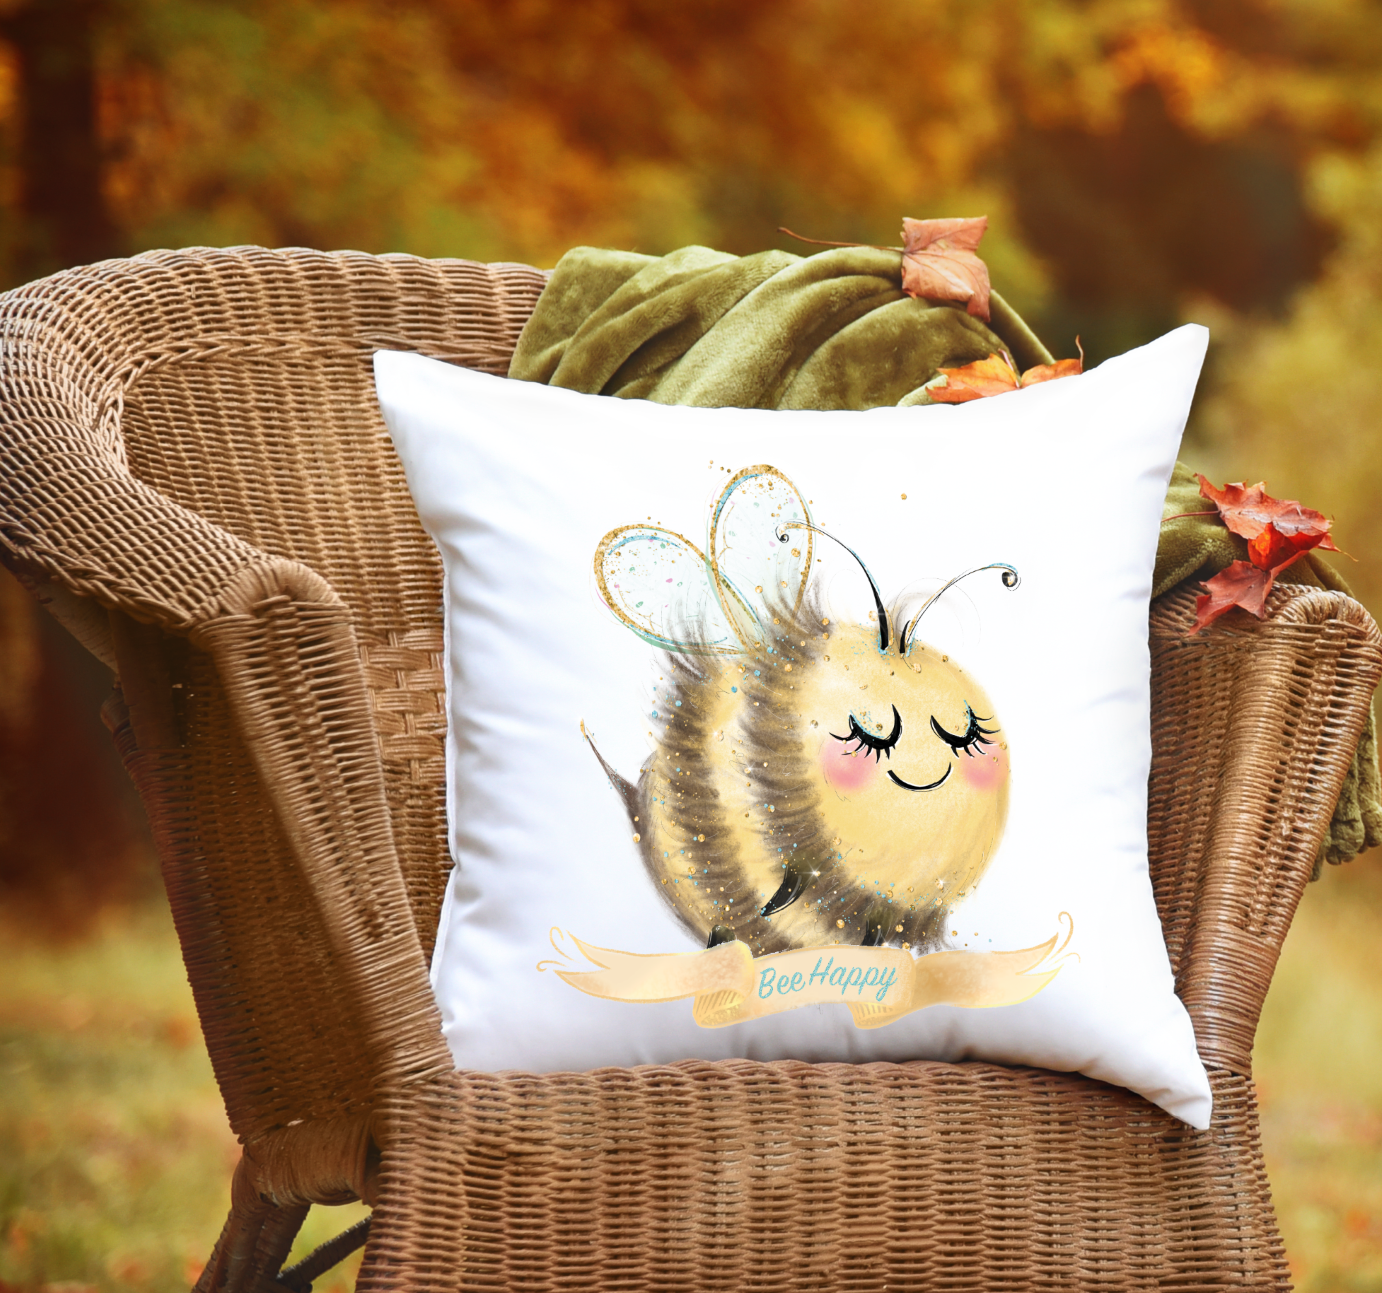 Bee Happy Cushion,Bee Cushion,Pillow,Throw,Bee Gift,Home Decor,Home Interiors